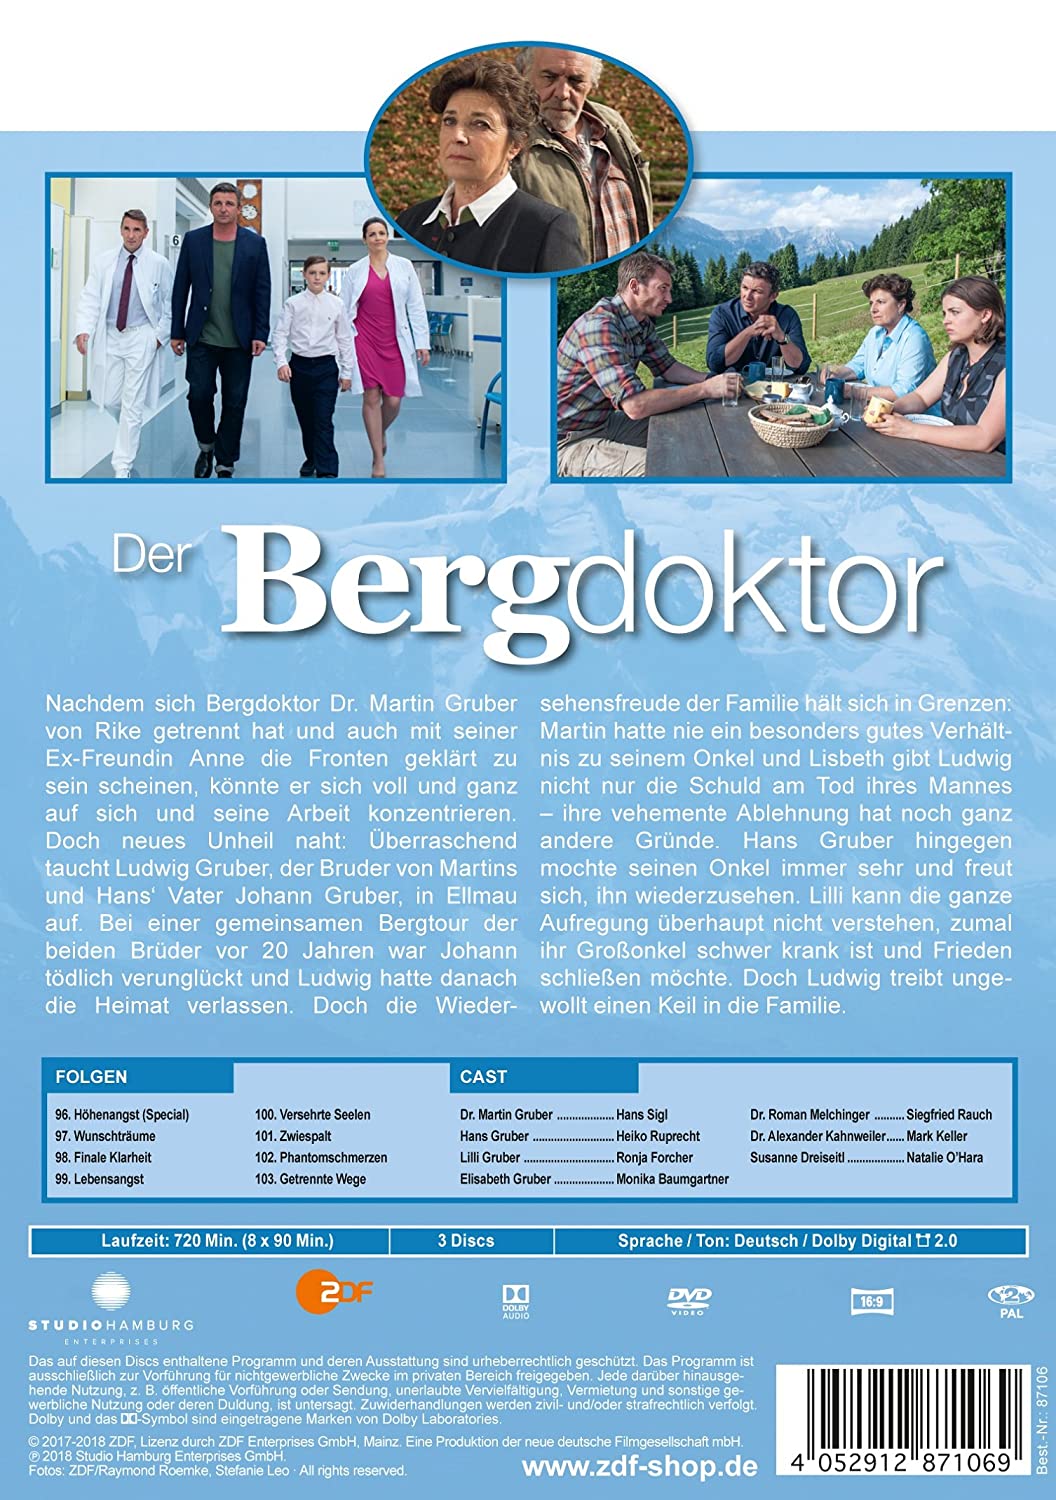 Der Bergdoktor - Staffel Season 11